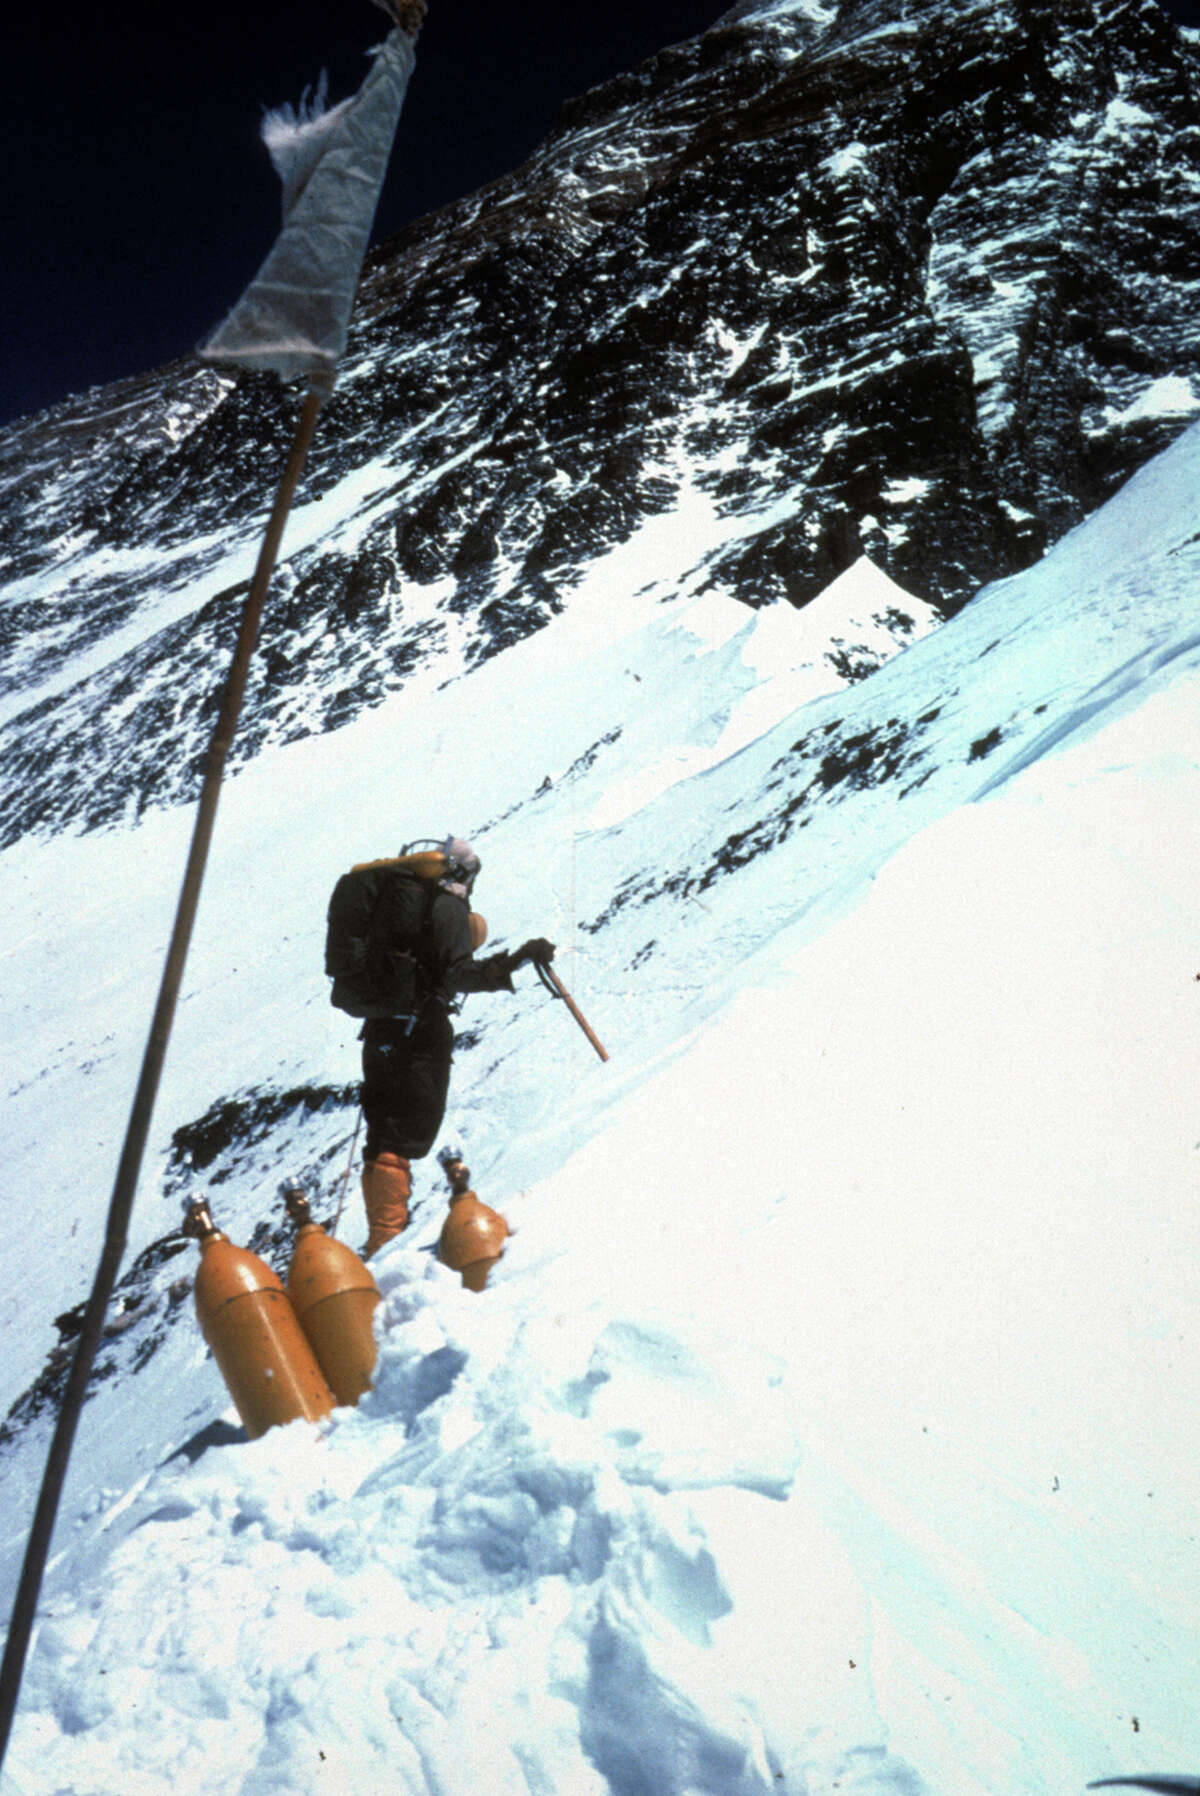 Prayer flags, Willi Unsoeld, oxygen bottles, and Mt. Everest.